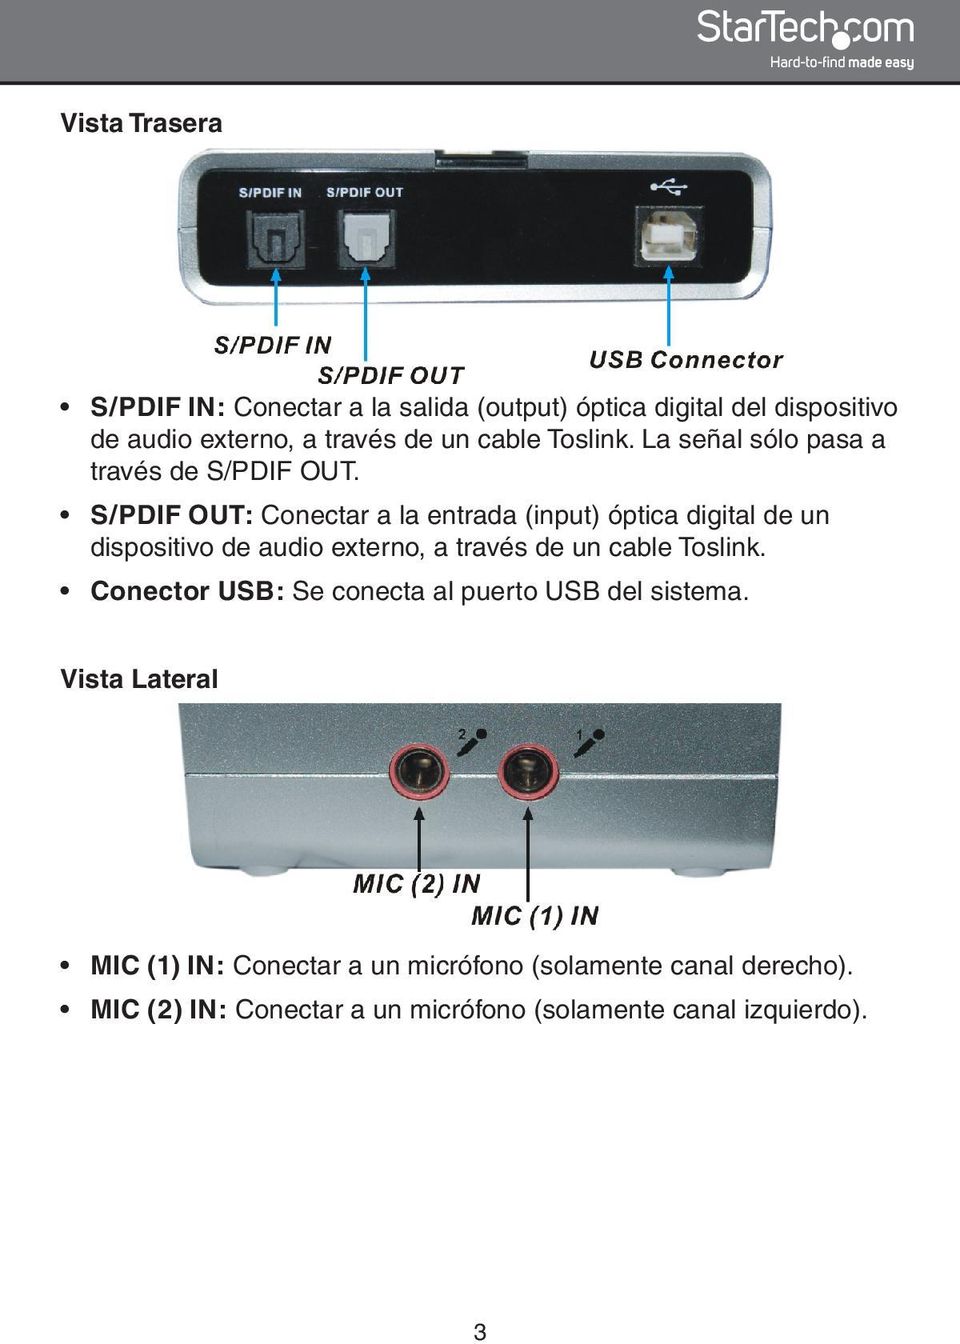 S/PDIF OUT: Conectar a la entrada (input) óptica digital de un dispositivo de audio externo, a través de un cable Toslink.